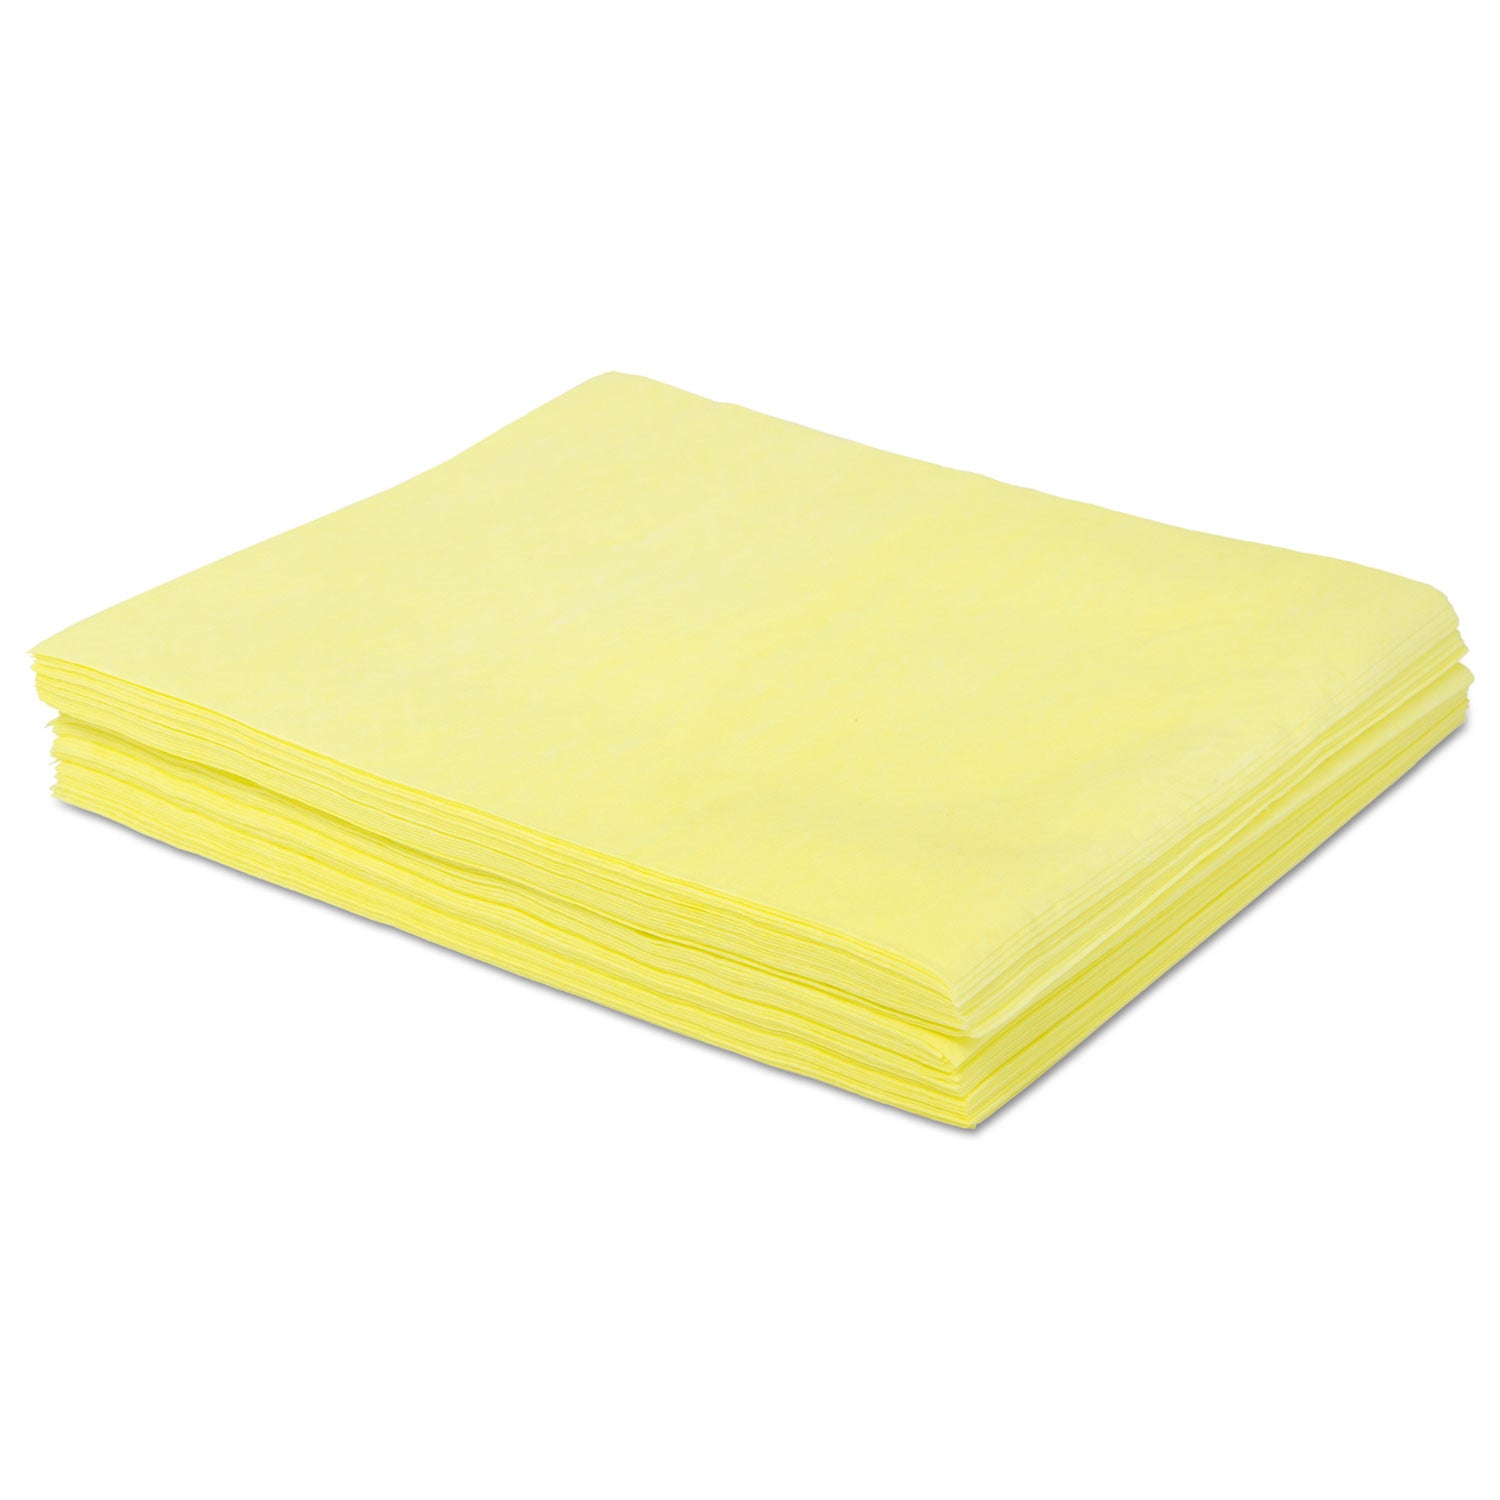 Dust Cloths, 18 x 24, Yellow, 50/Bag, 10 Bags/Carton - 